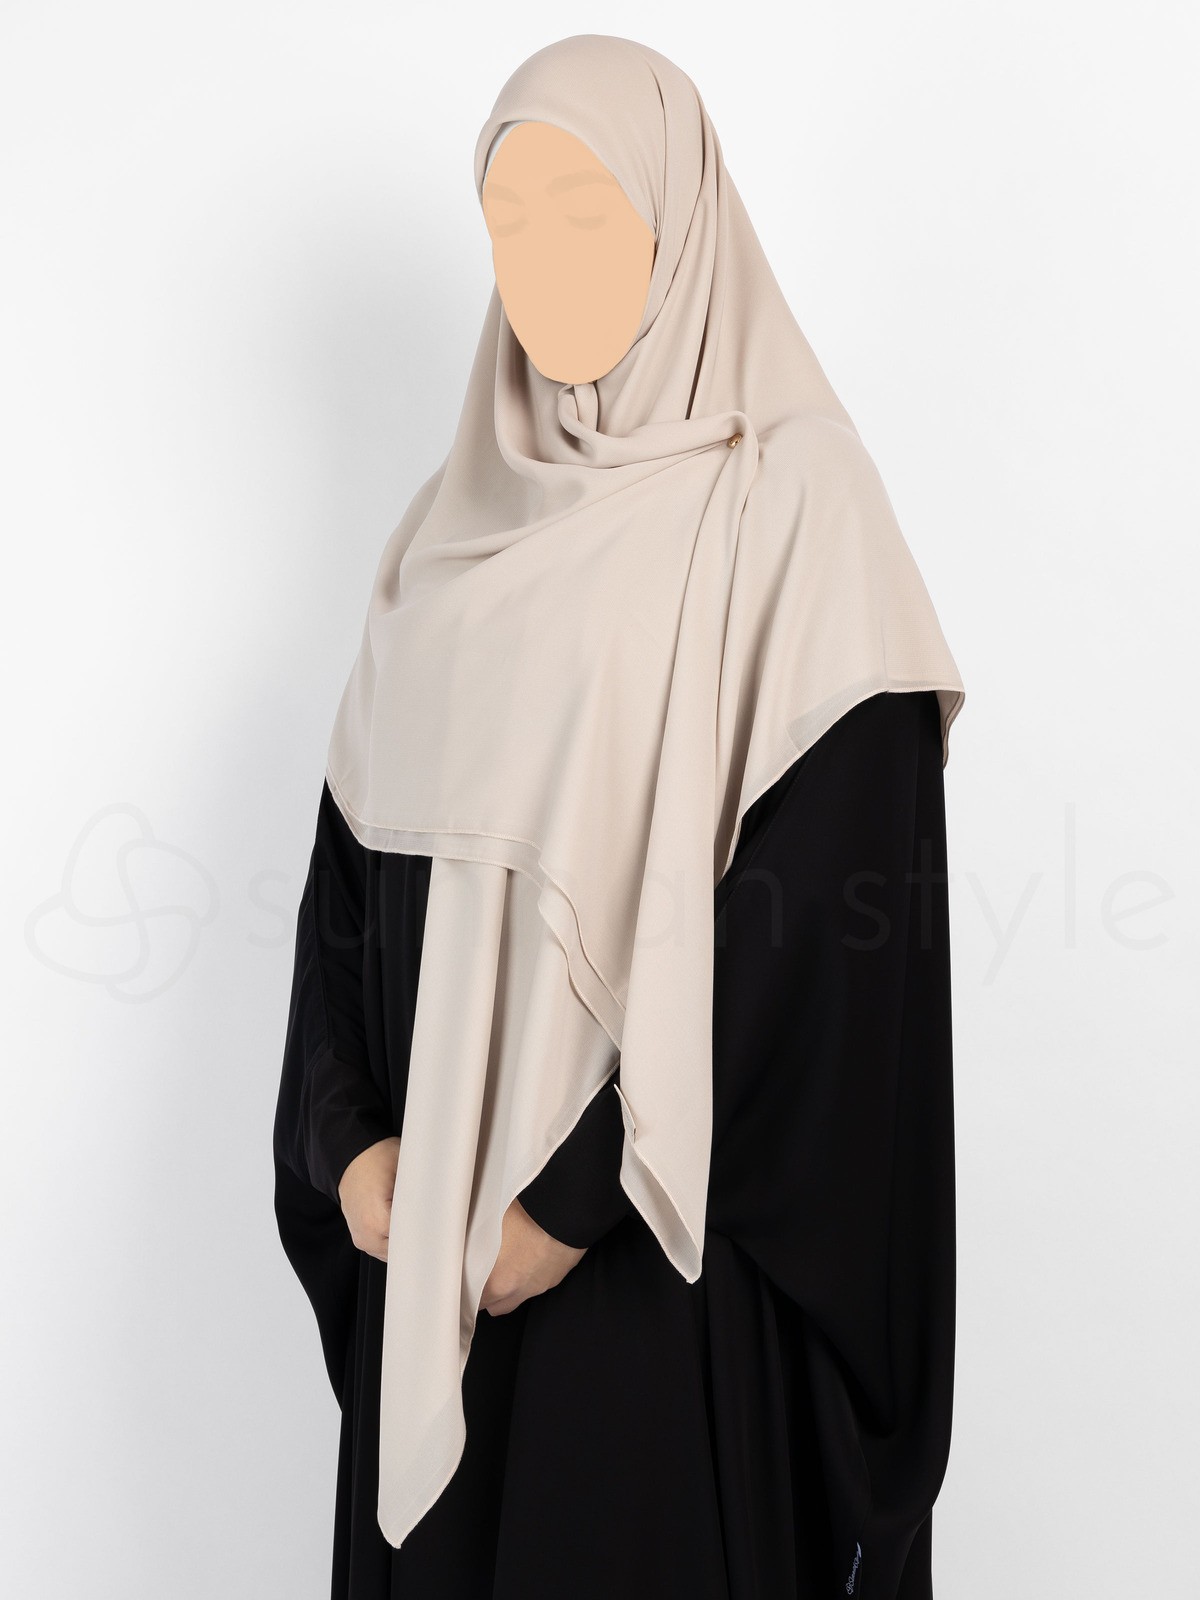 Sunnah Style - Essentials Square Hijab (Premium Chiffon) - Large (Blue Jay)